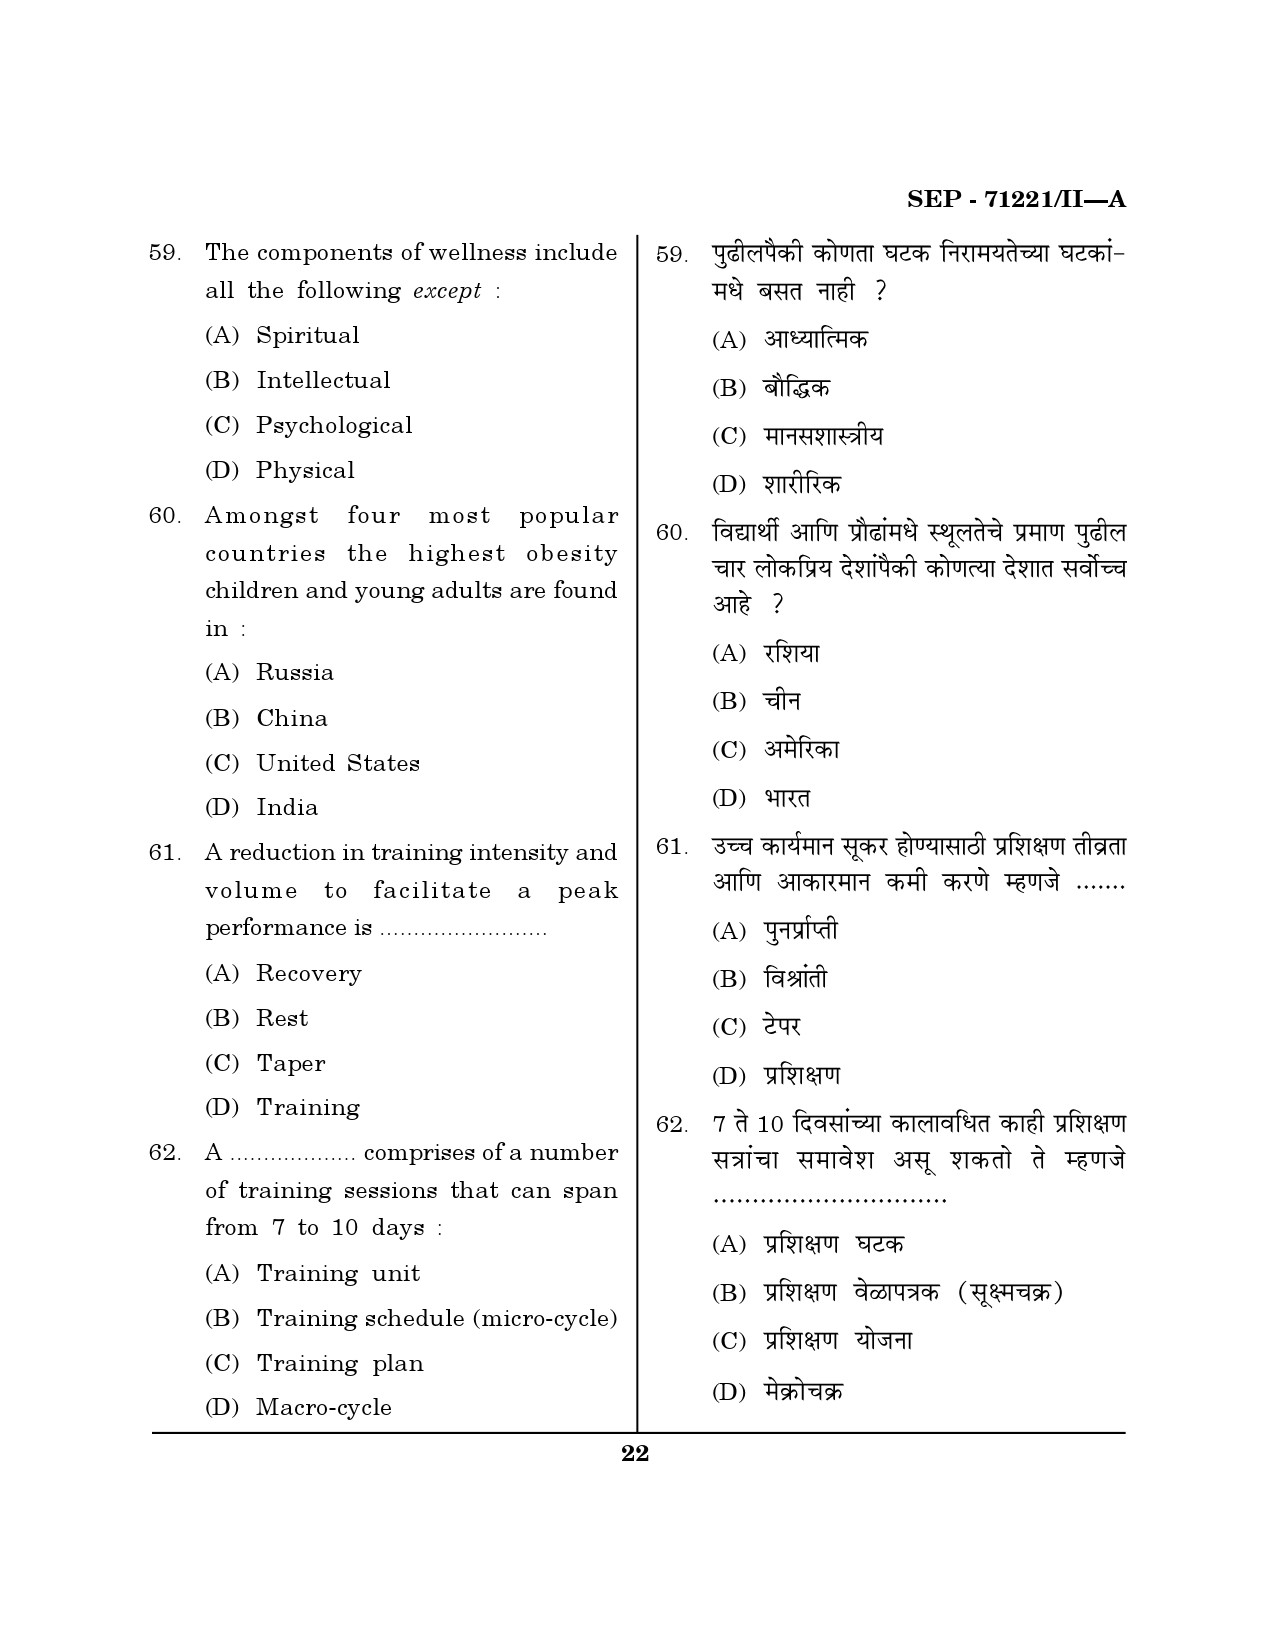 Maharashtra SET Physical Education Exam Question Paper September 2021 21